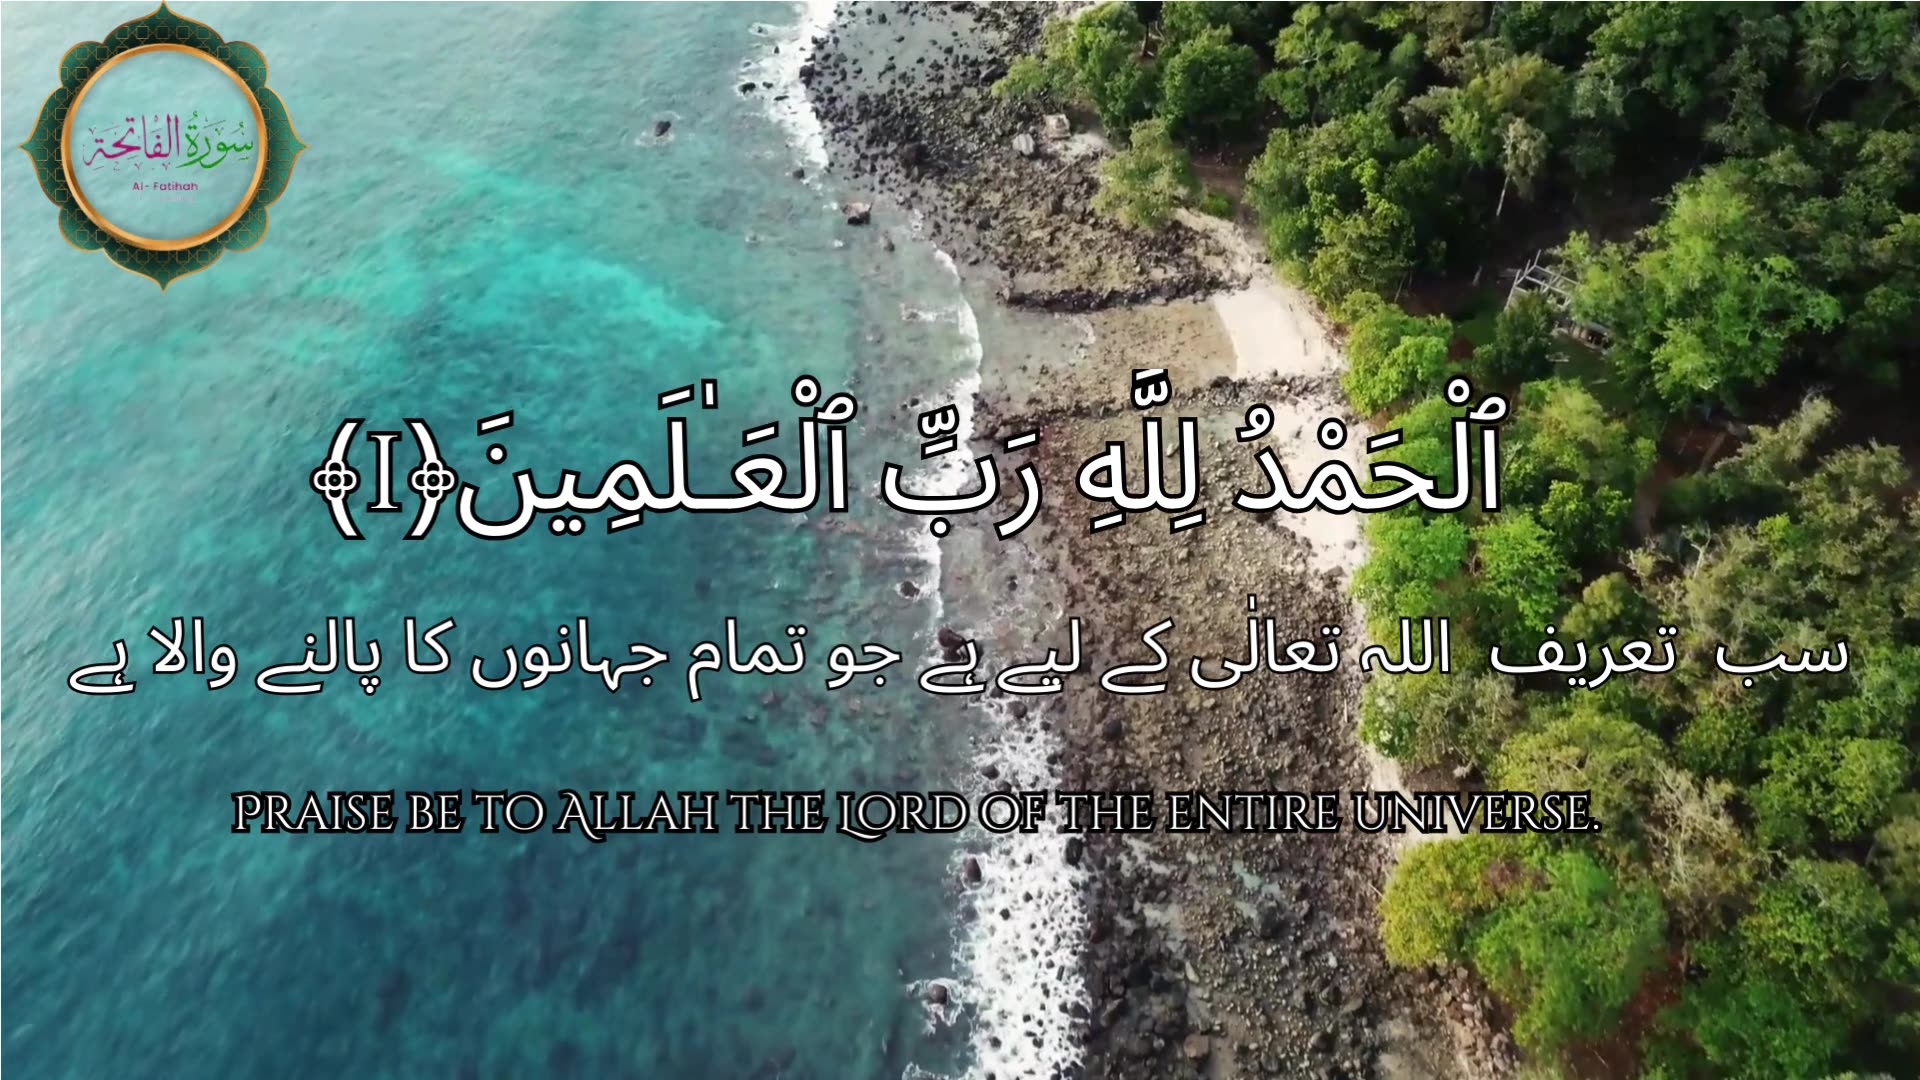 Surah Al Fatiha | The Opening | English Arabic & Urdu Translation |IslamVideos